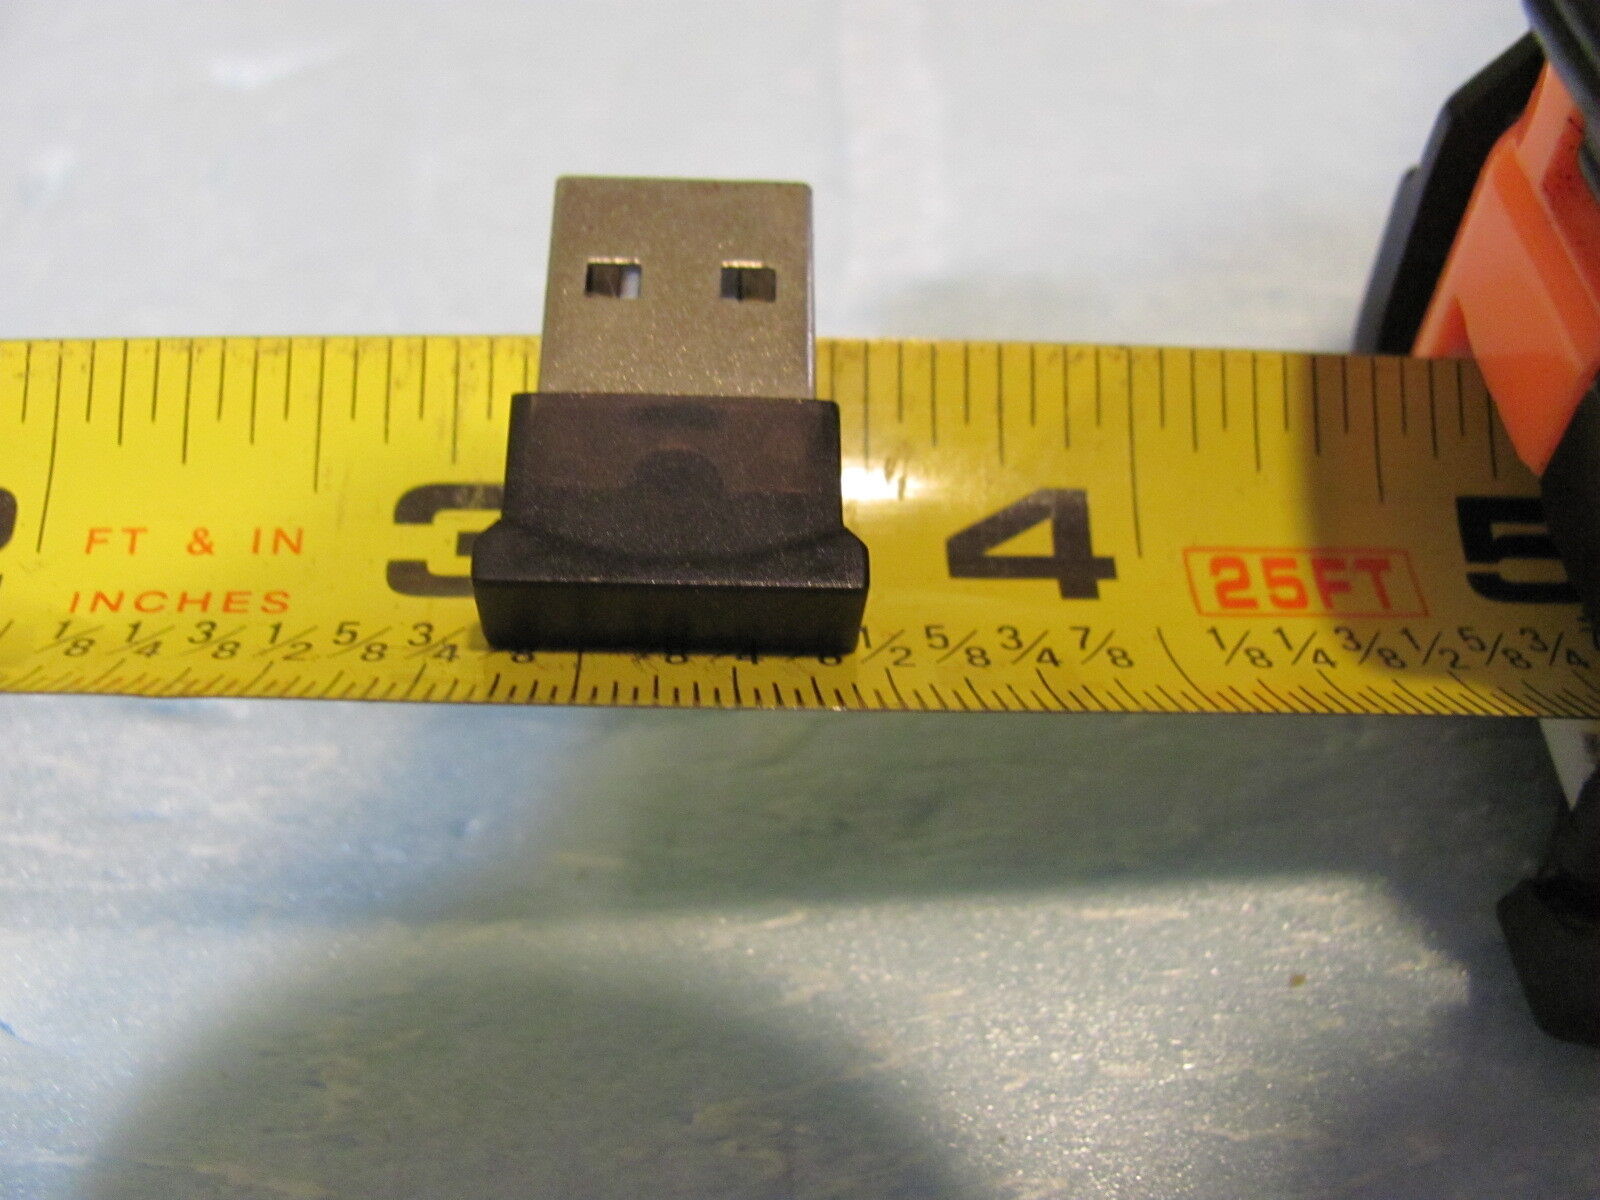 Bluetooth USB Dongle v3.0 Mini \